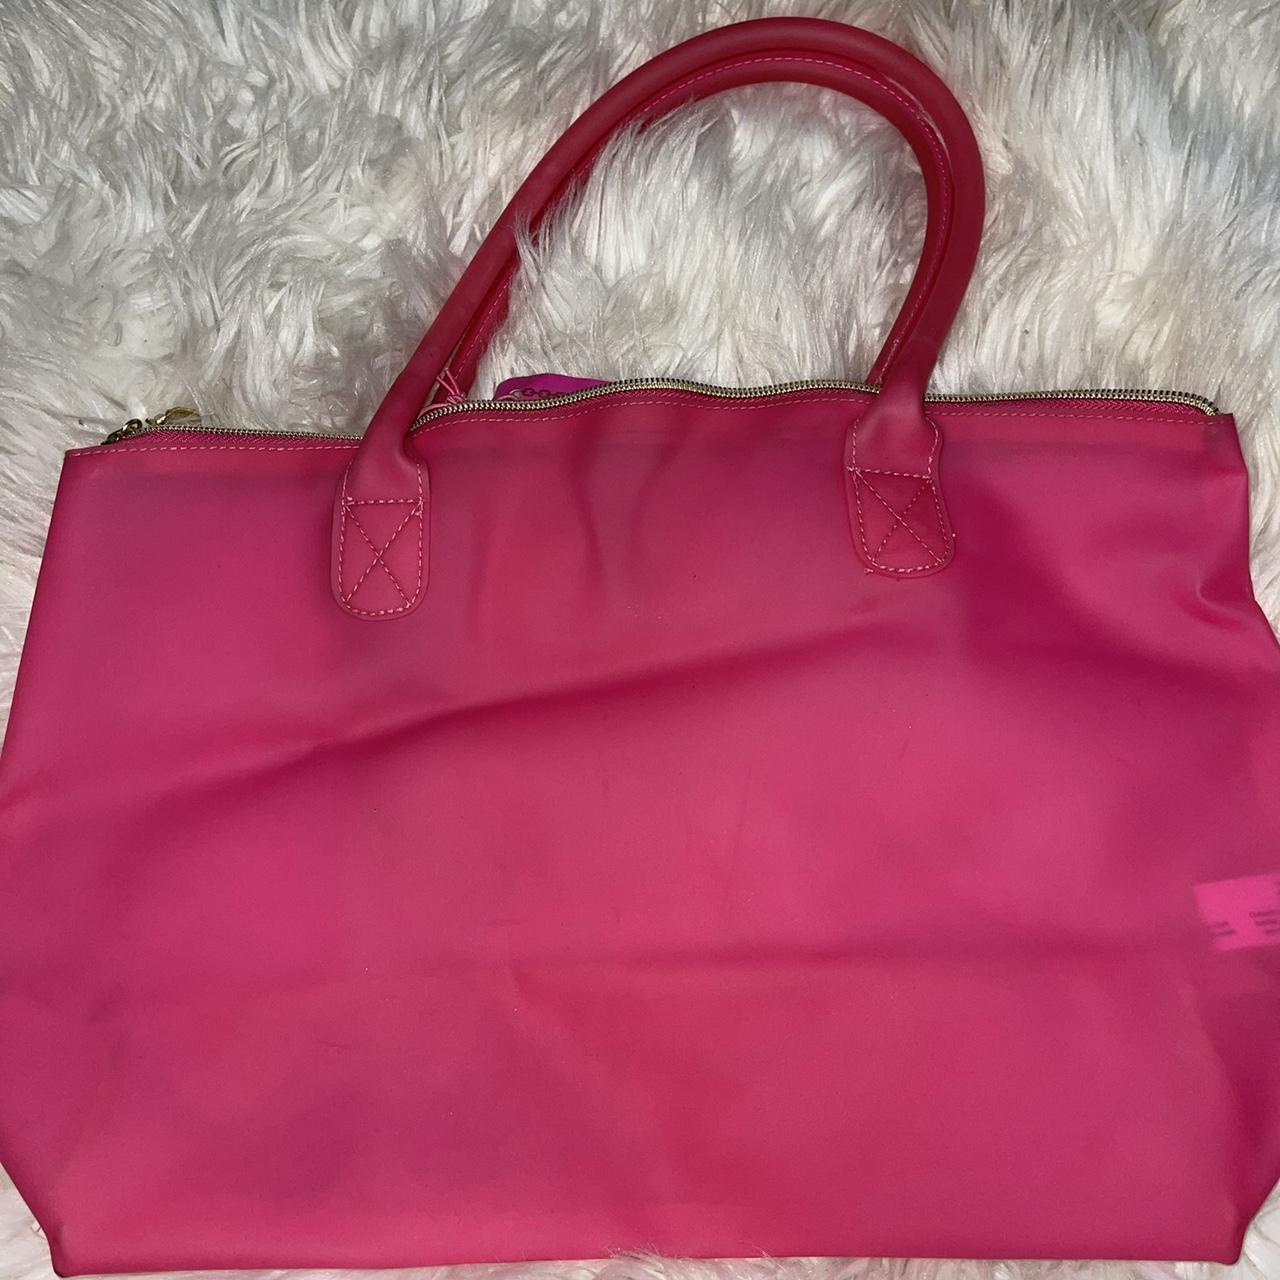 Nicki Minaj PIFBAG Friday Pink Quilted Satchel Purse Hand Bag